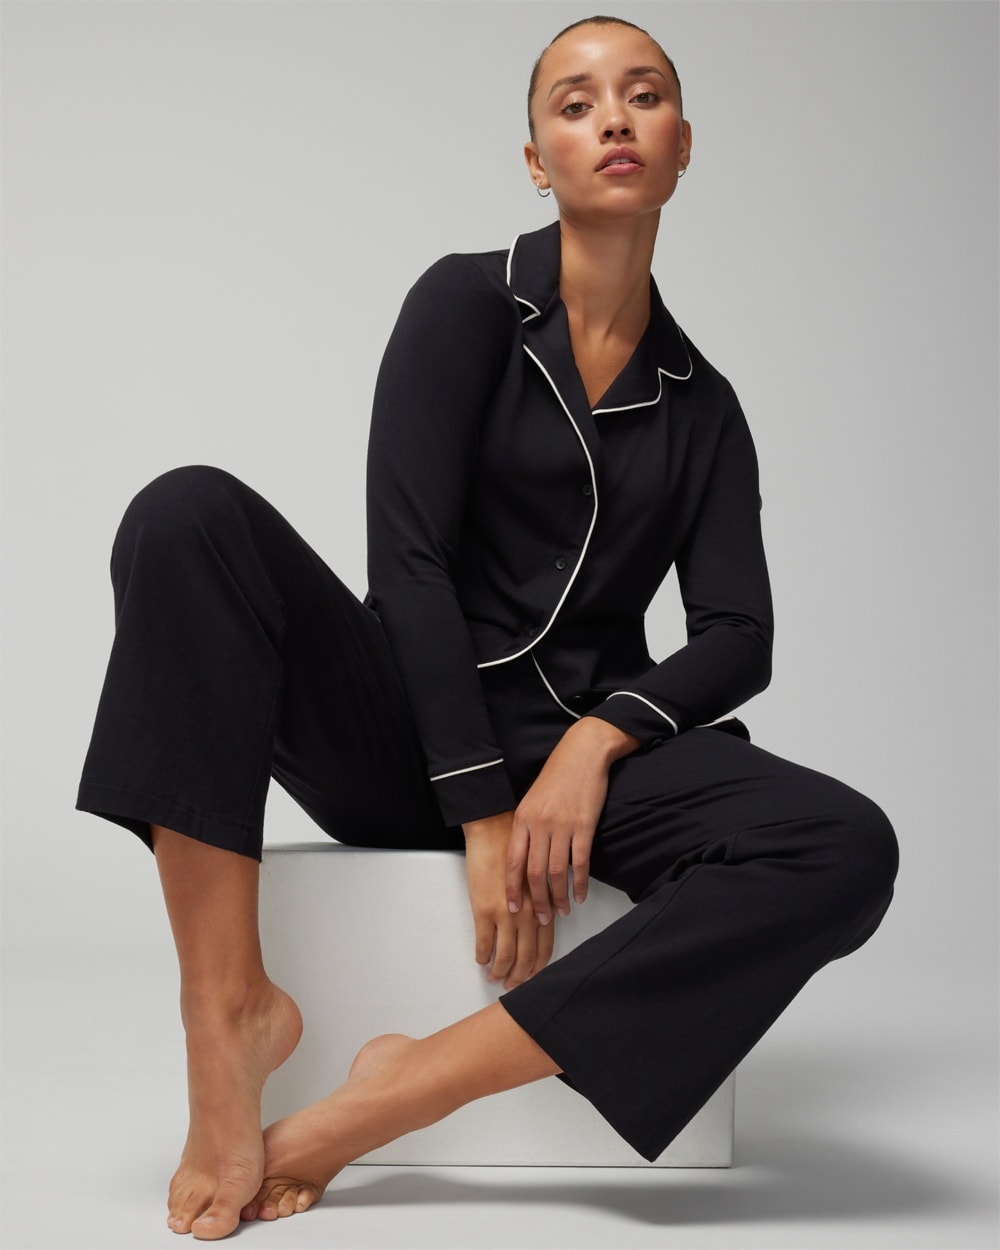 Embraceable Long-Sleeve Pajama Set - WA